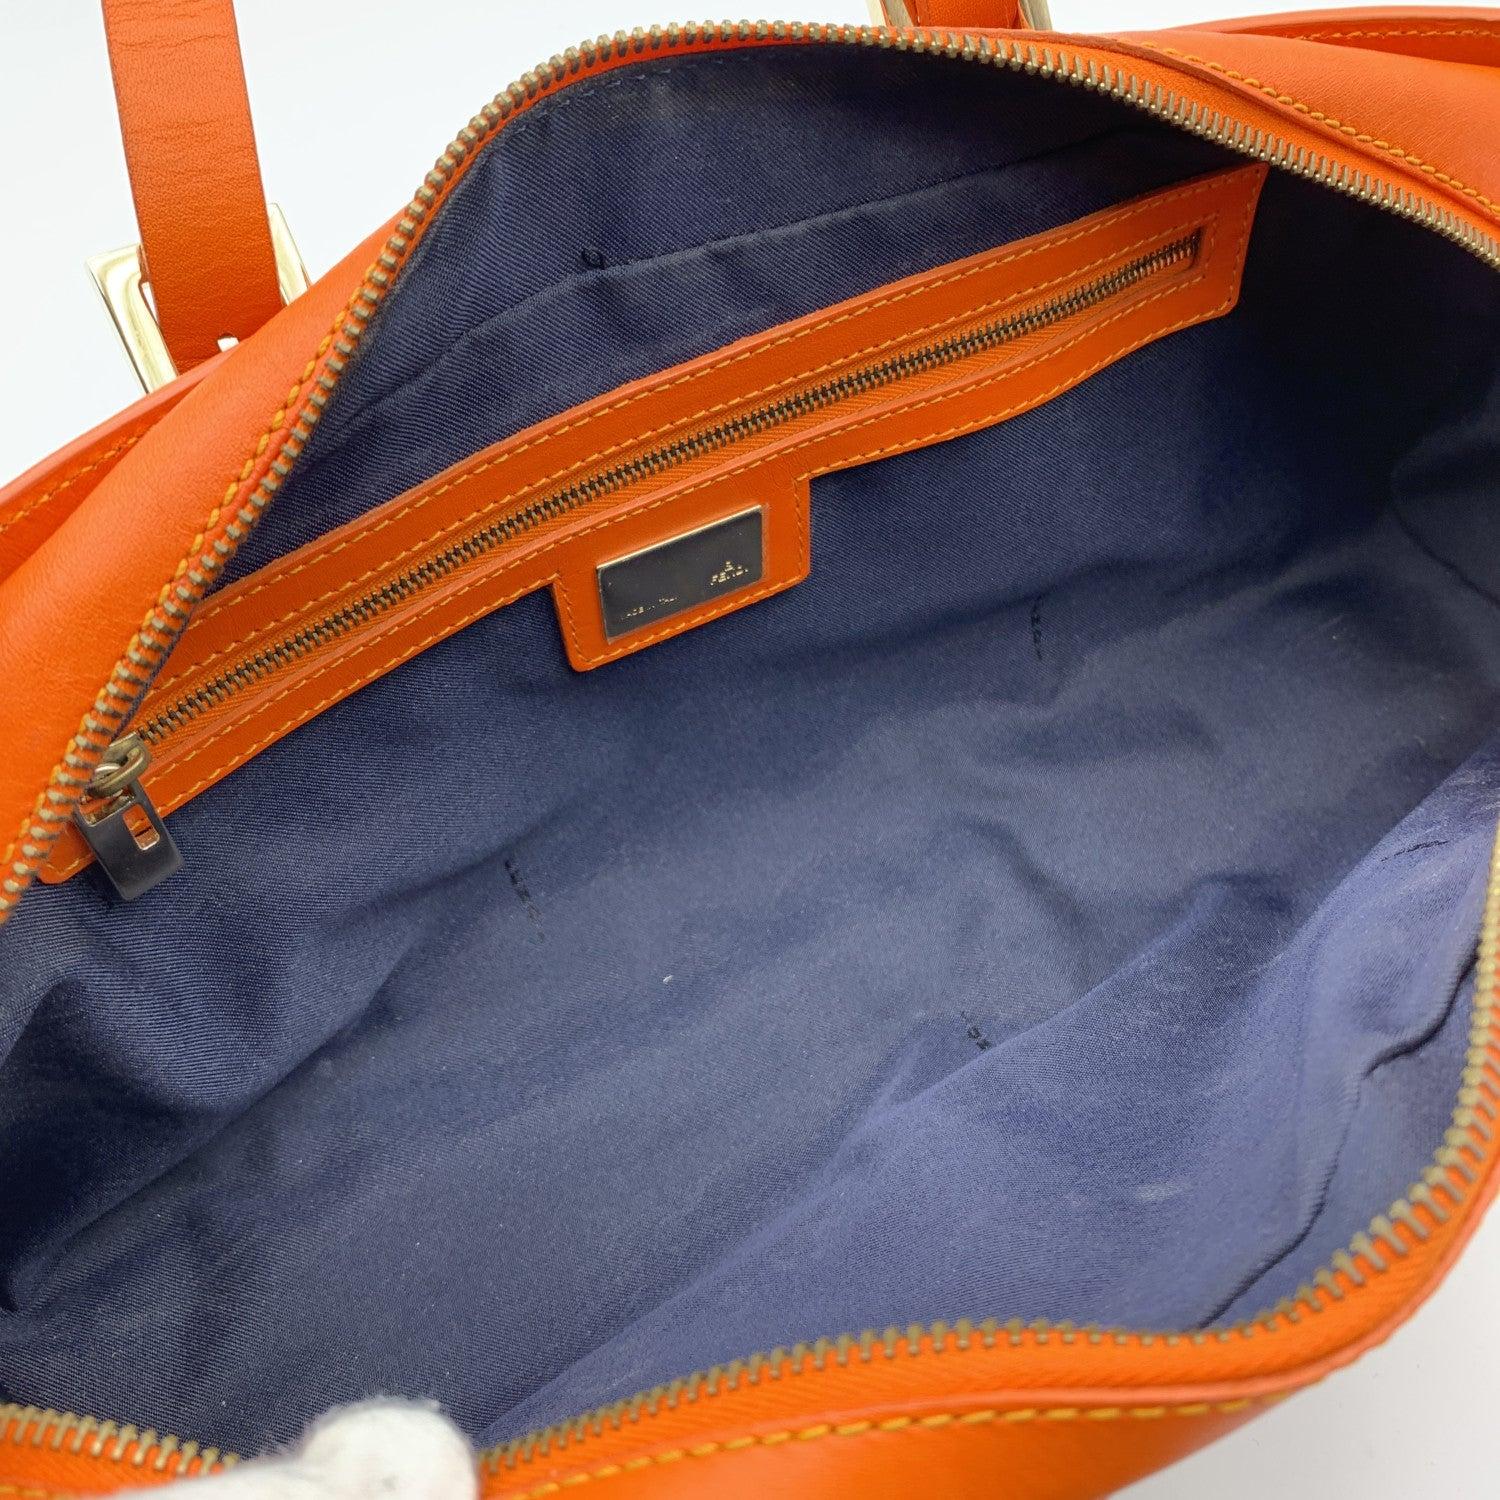 Fendi Wicker and Orange Leather Studded Tote Handbag Satchel For Sale 3